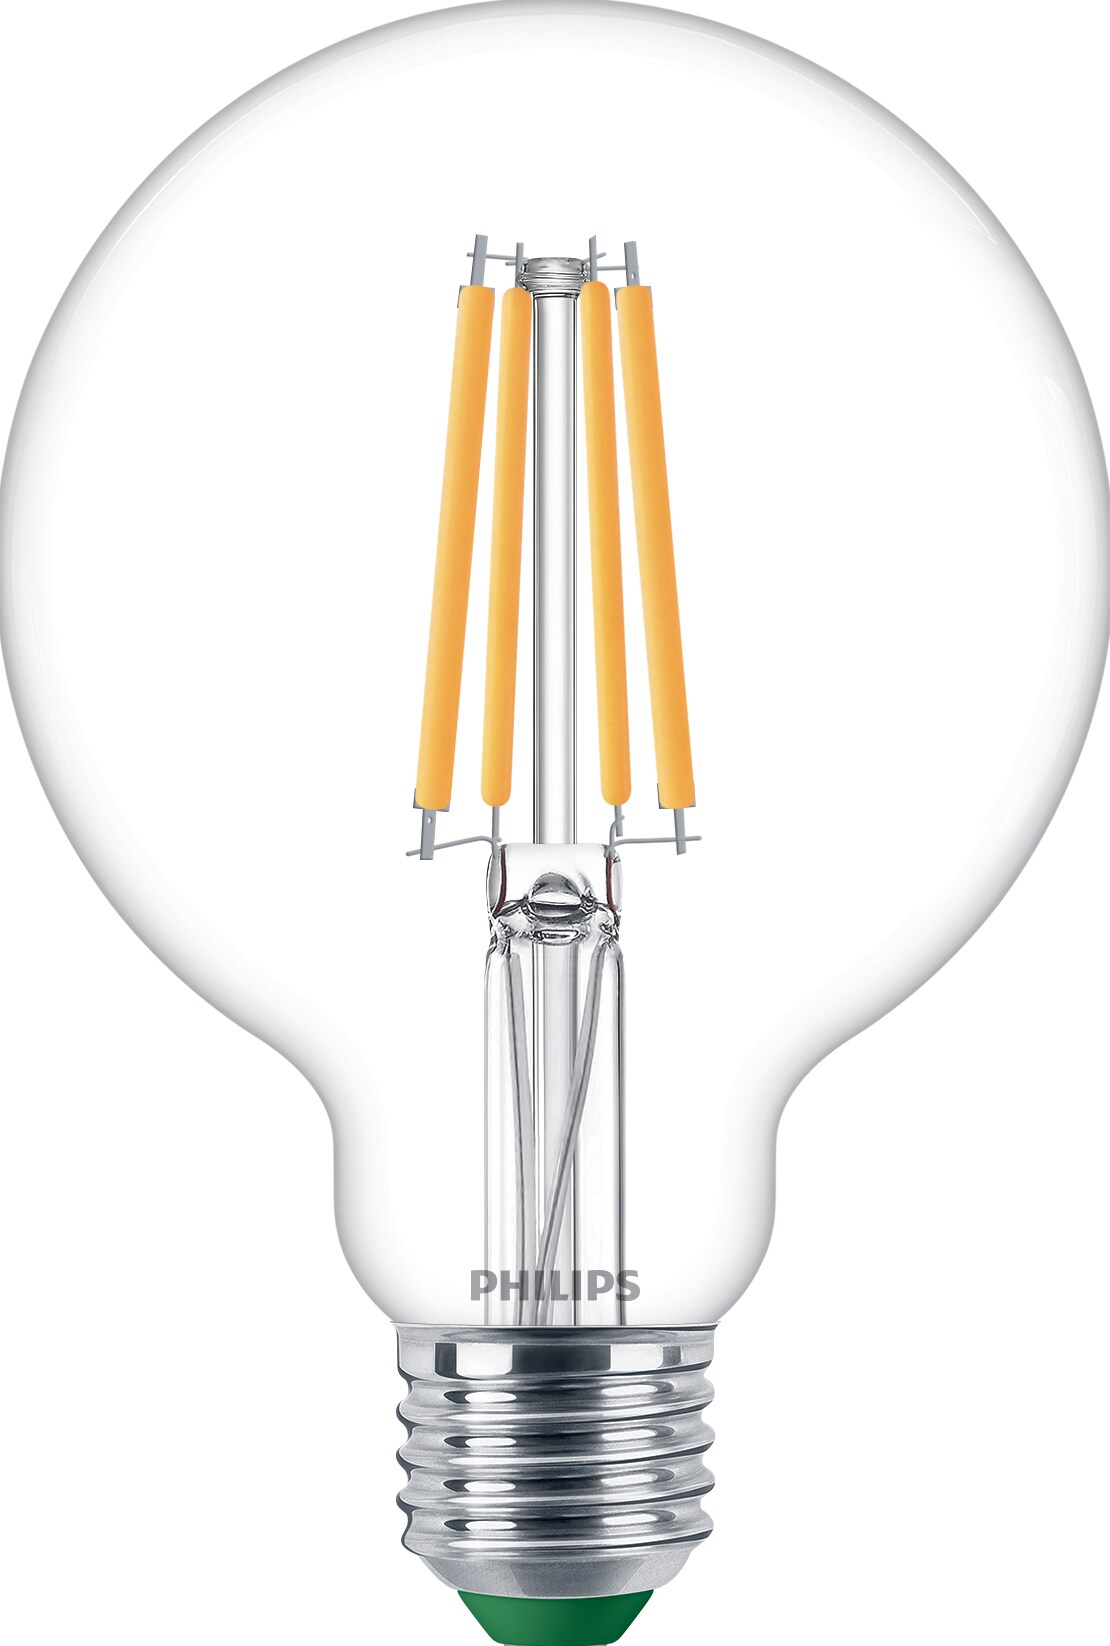 Philips Classic LED glödlampa 4W G95 E27 - Elgiganten